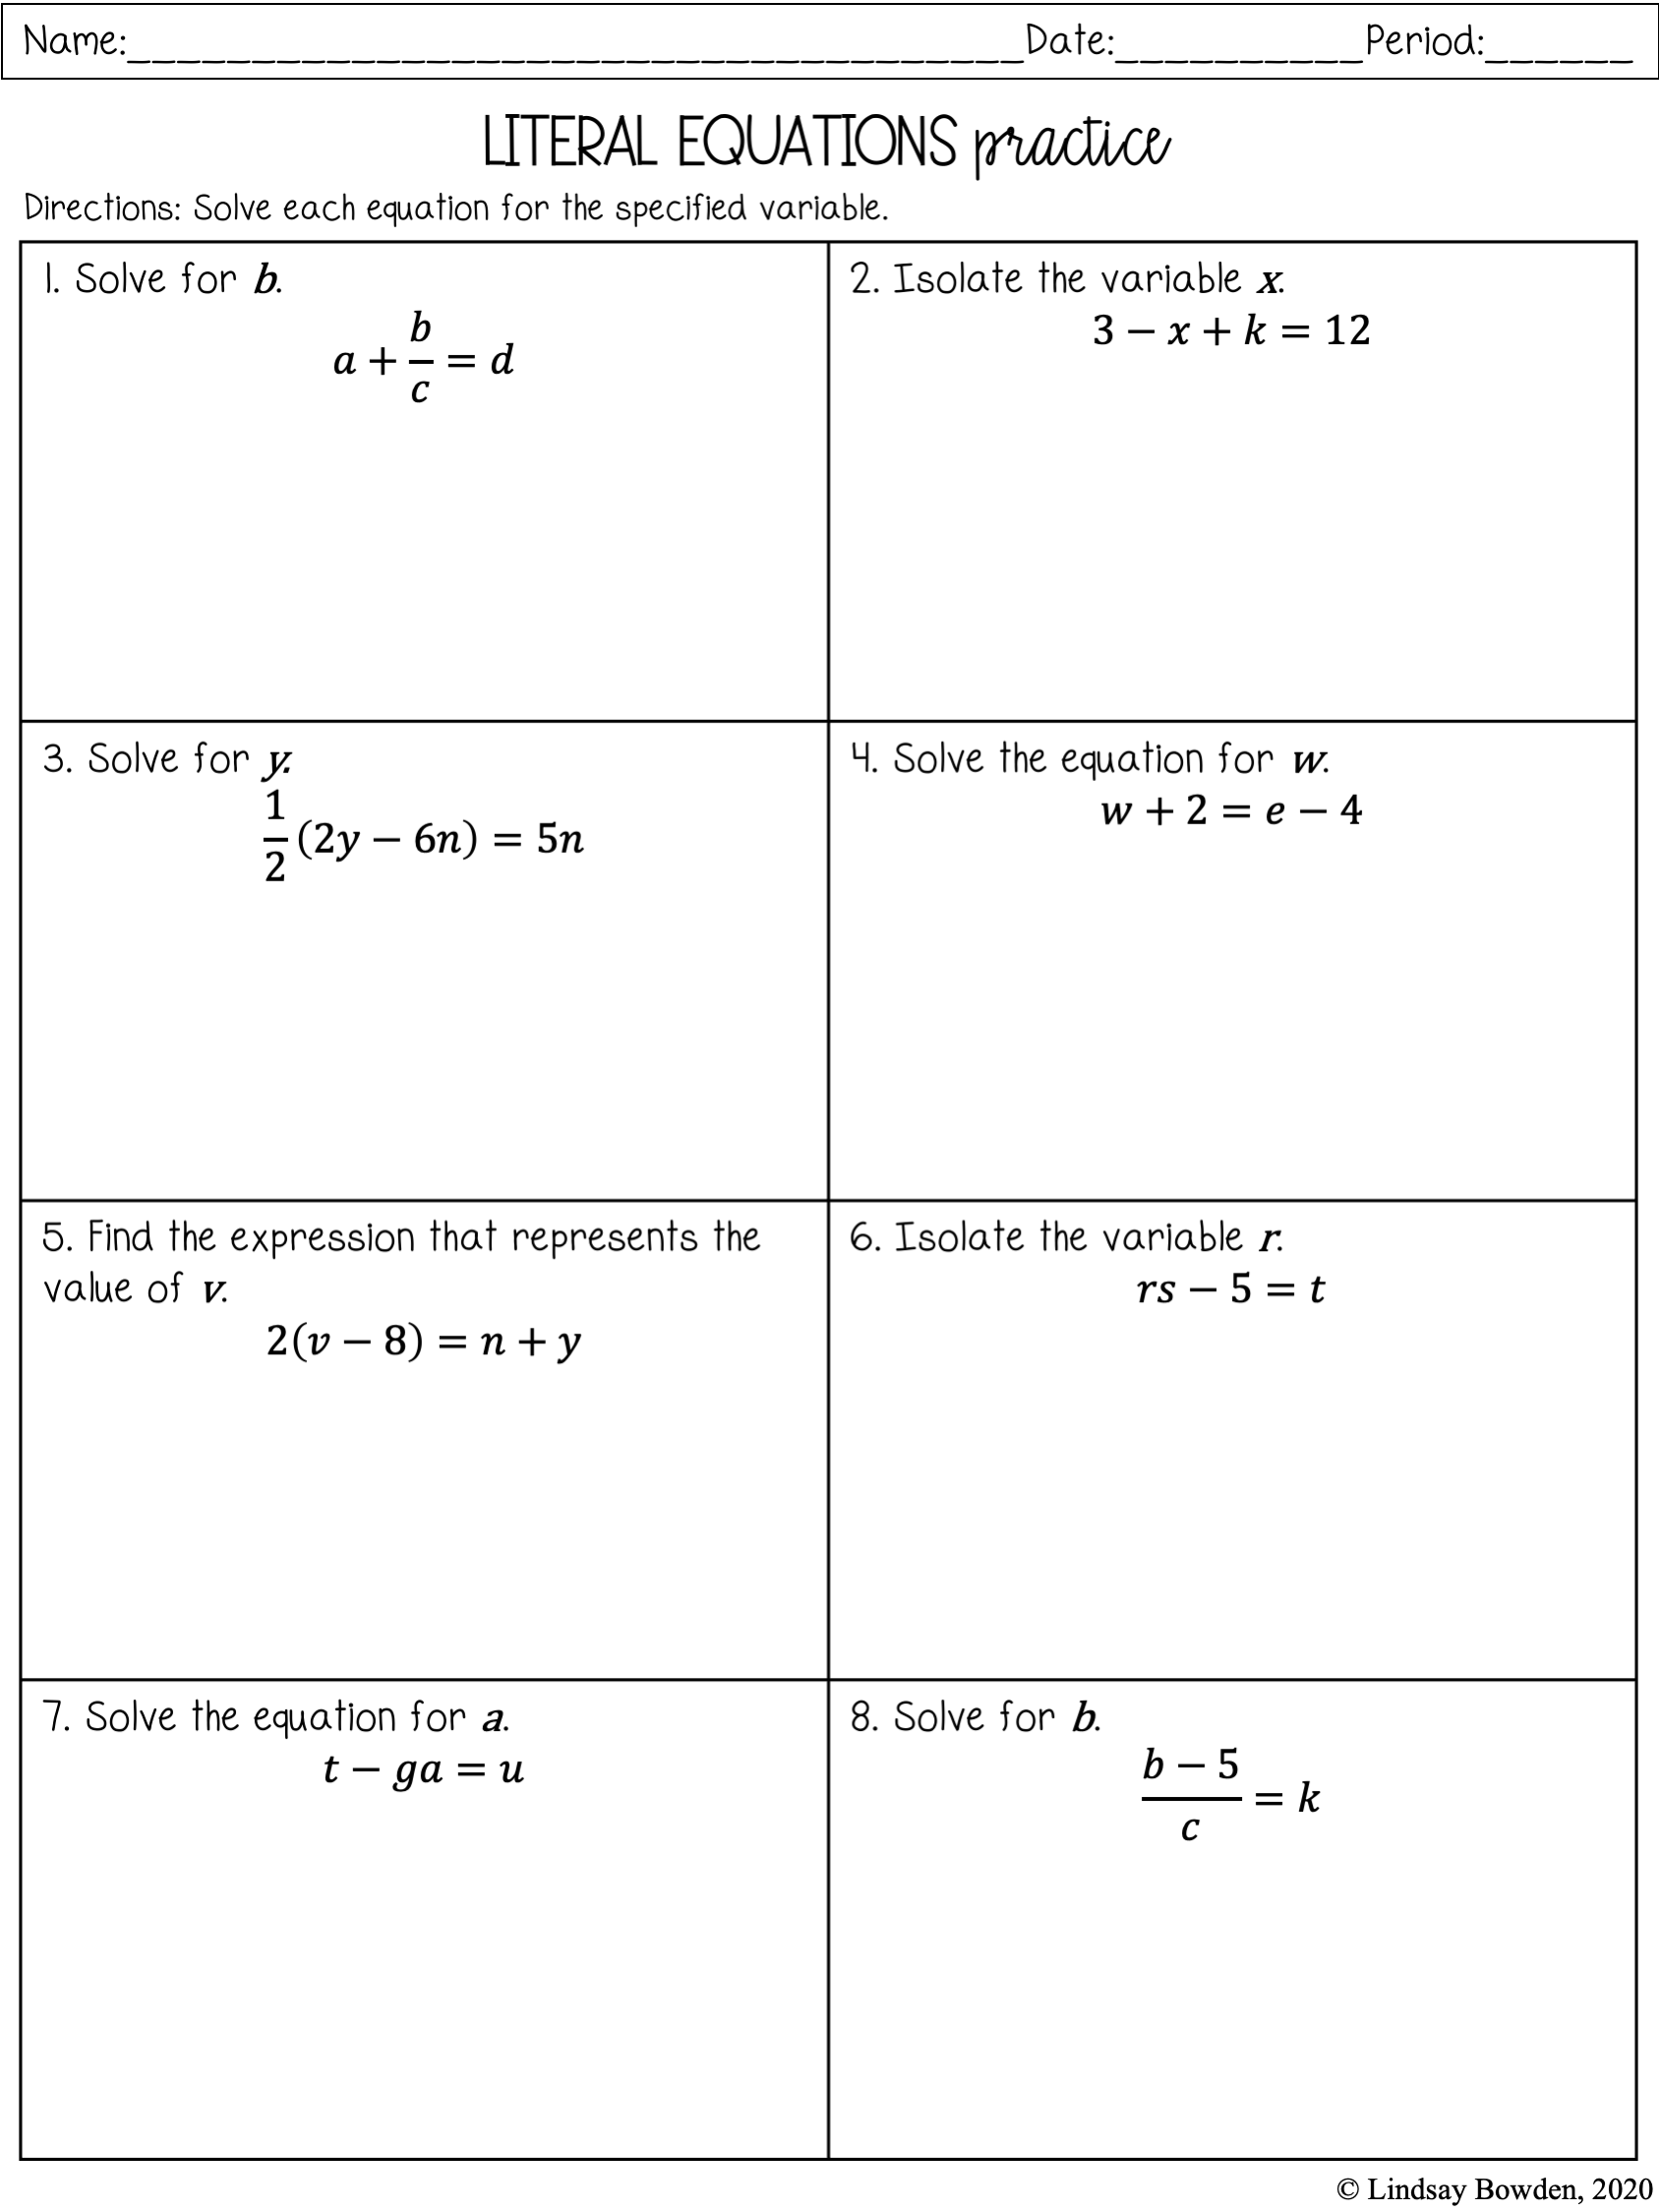 Literal Equations Notes and Worksheets - Lindsay Bowden Intended For Literal Equations Worksheet Algebra 1